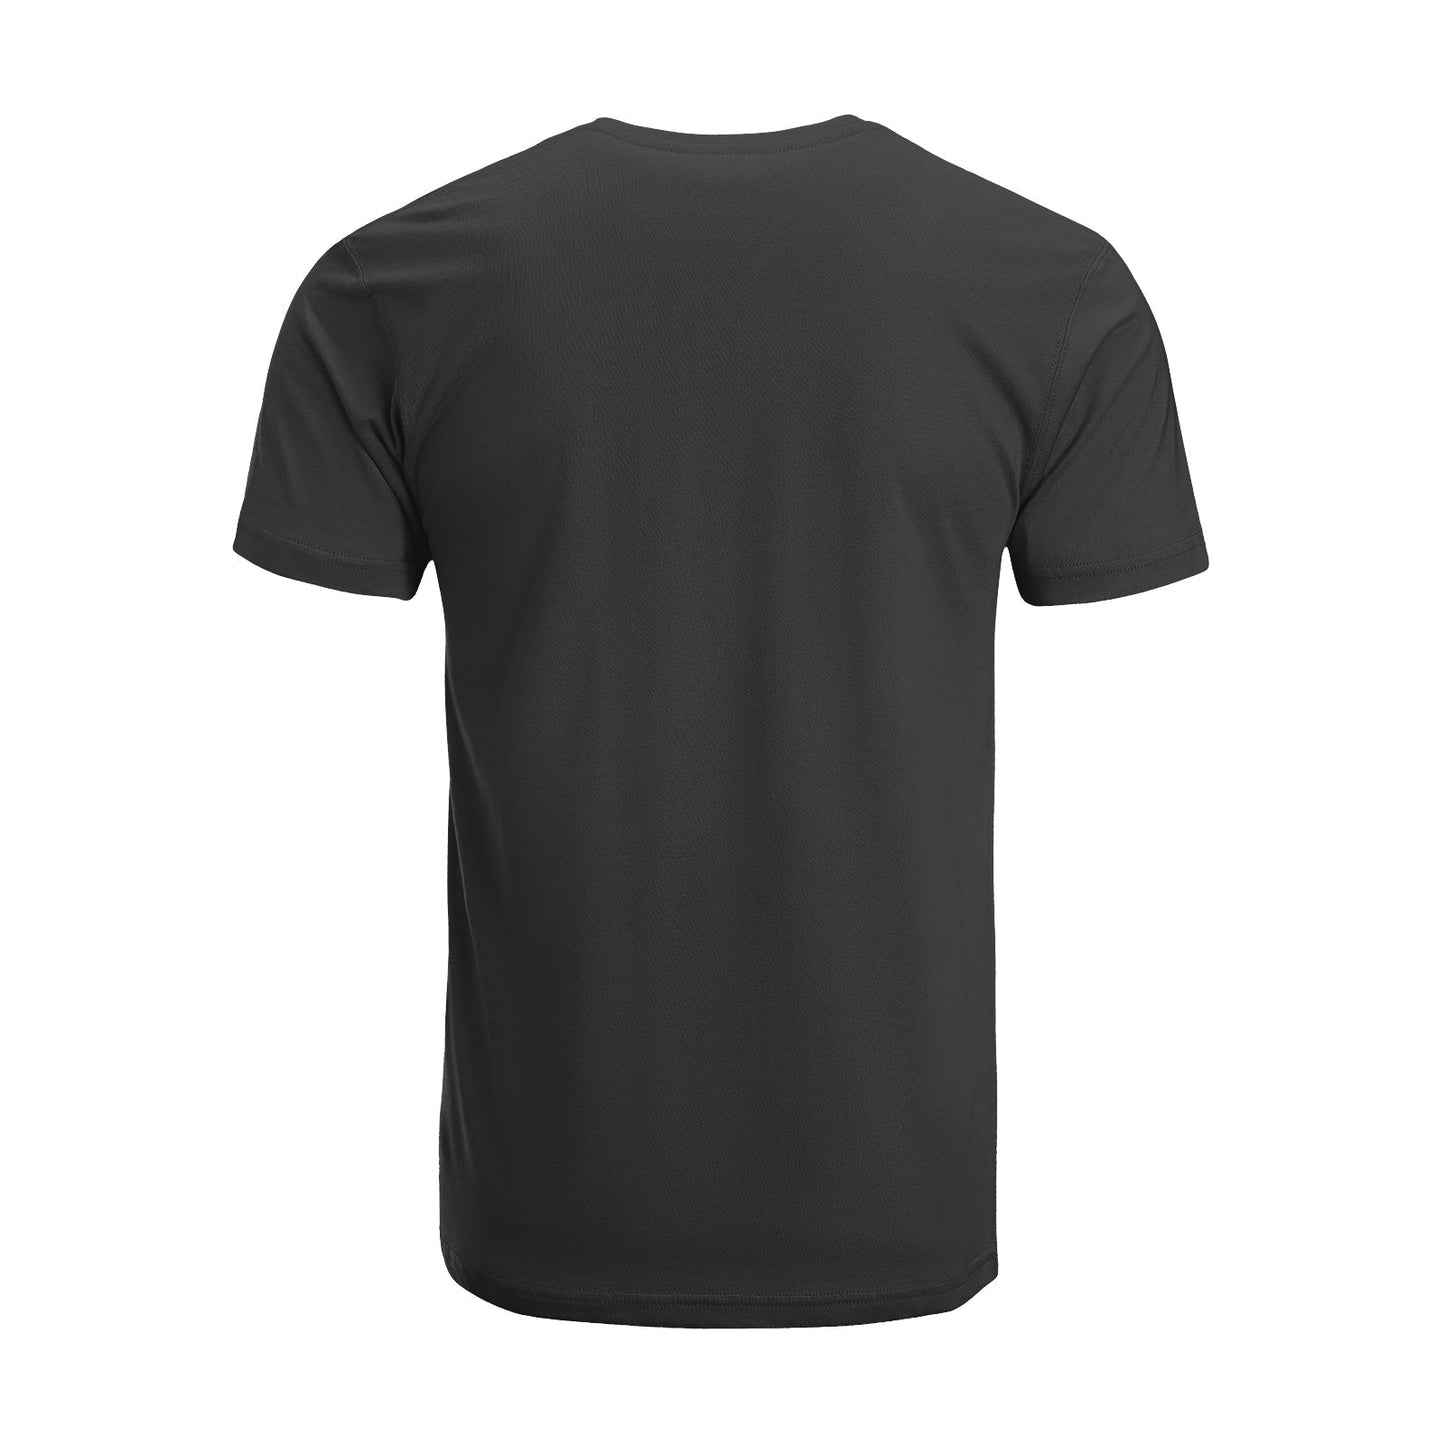 Unisex Short Sleeve Crew Neck Cotton Jersey T-Shirt MOM 14